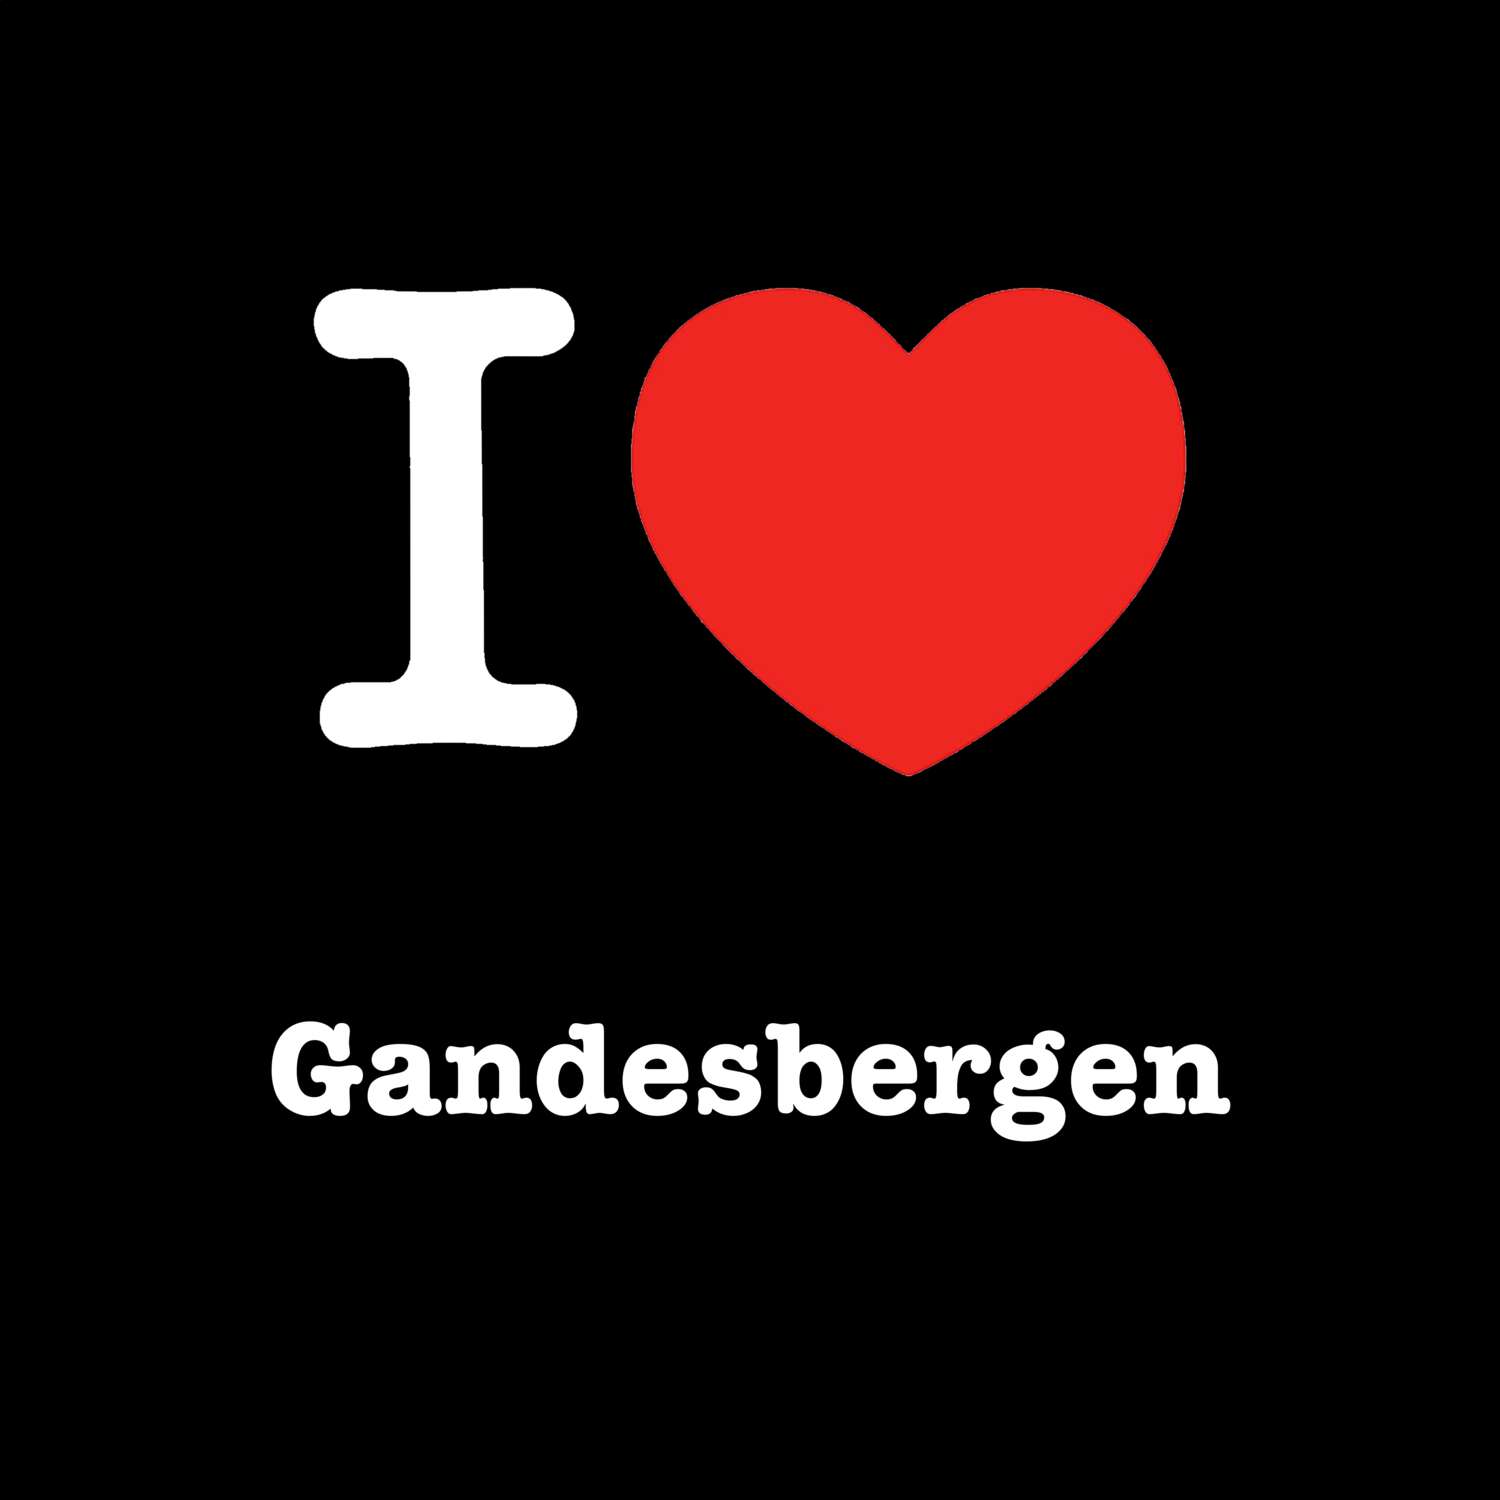 Gandesbergen T-Shirt »I love«